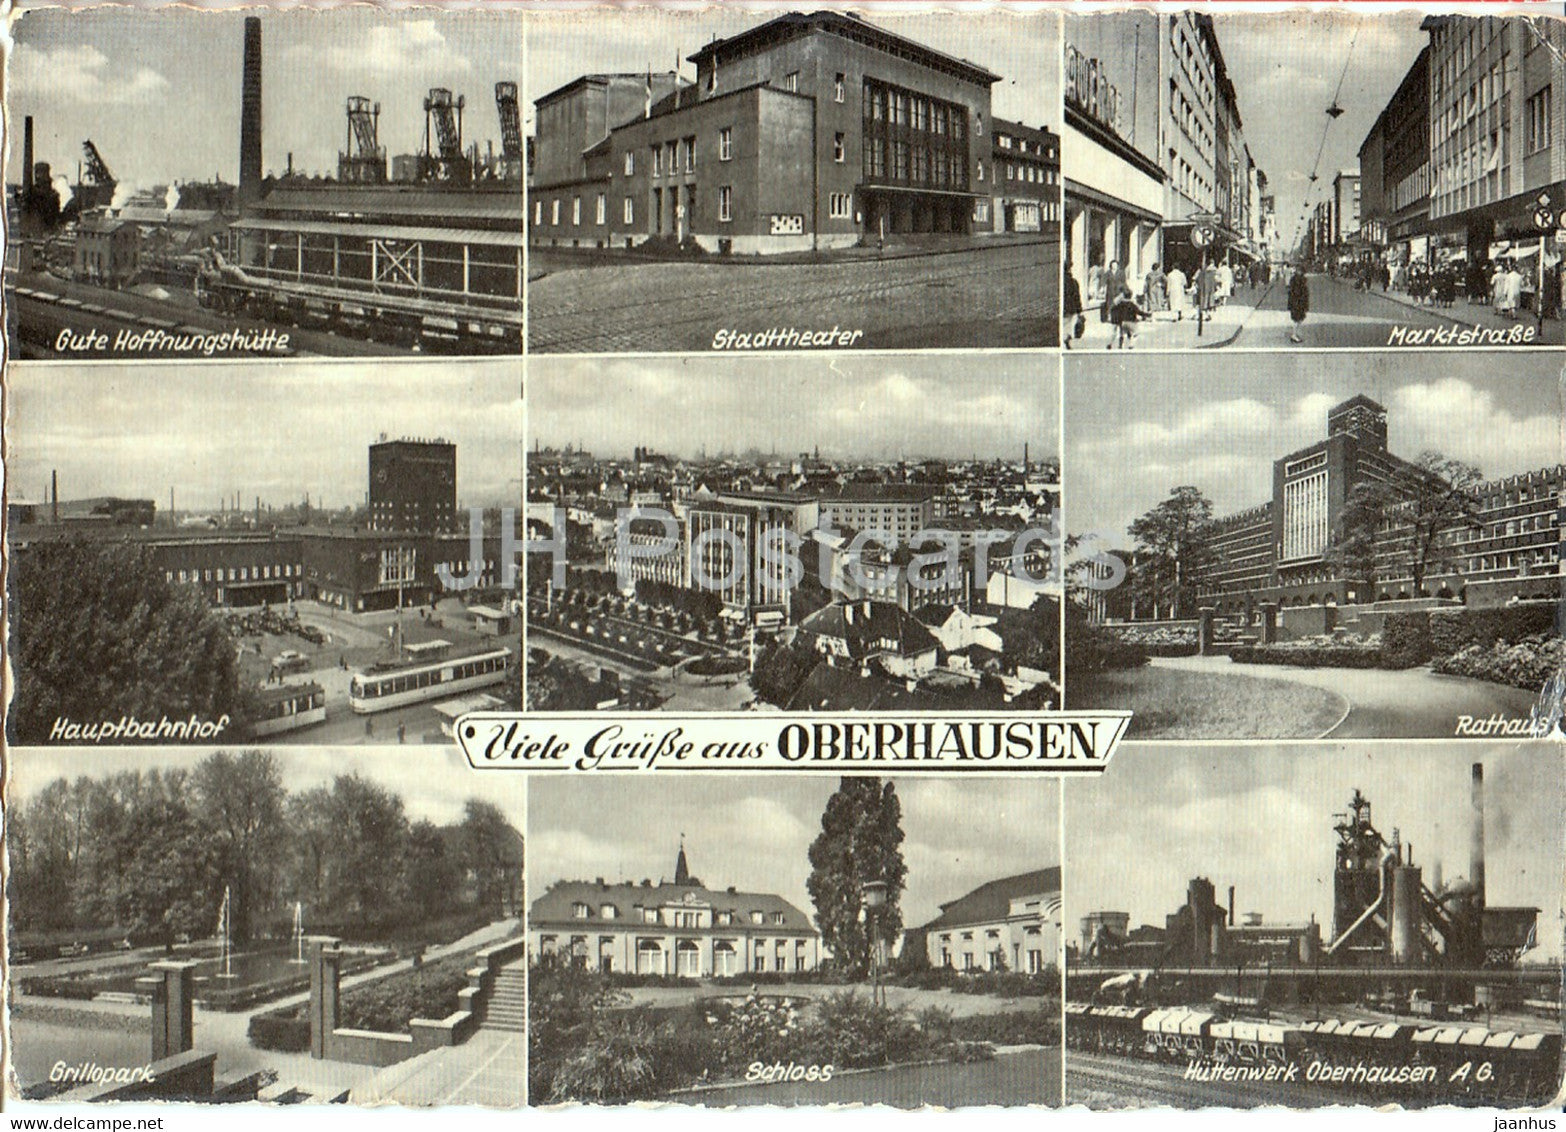 Viele Grusse aus Oberhausen - Stadttheater - Marktstrasse - Haupbahnhof - Rathaus - tram - Schloss 1965 - Germany - used - JH Postcards